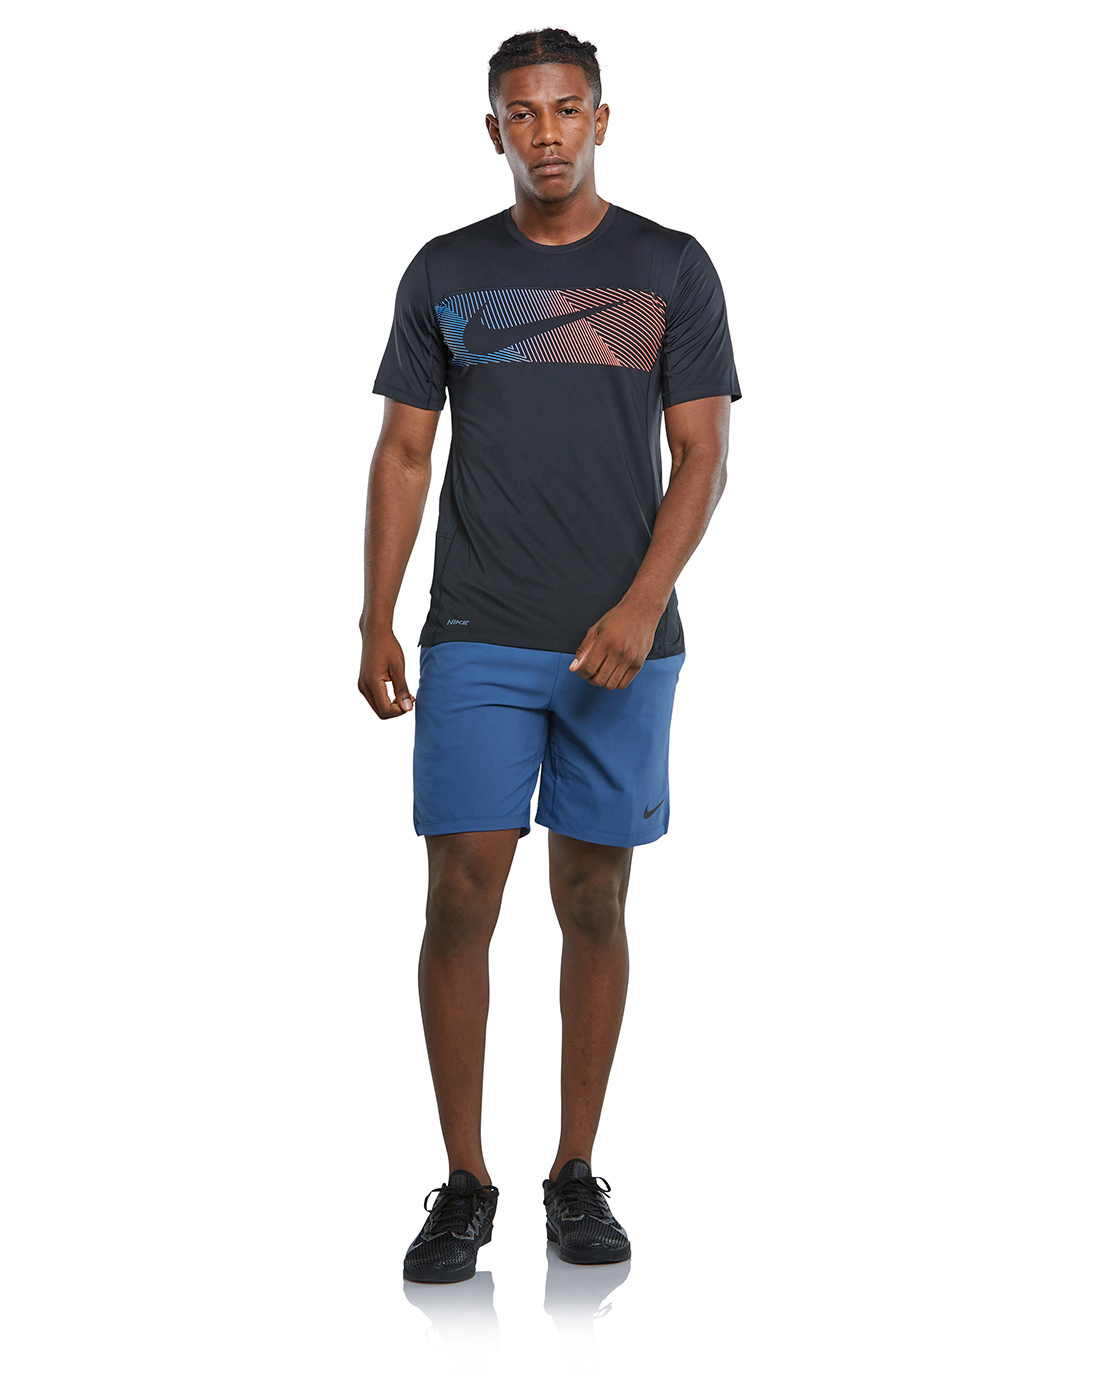 Nike Mens Baselayer LV T-shirt | Life Style Sports